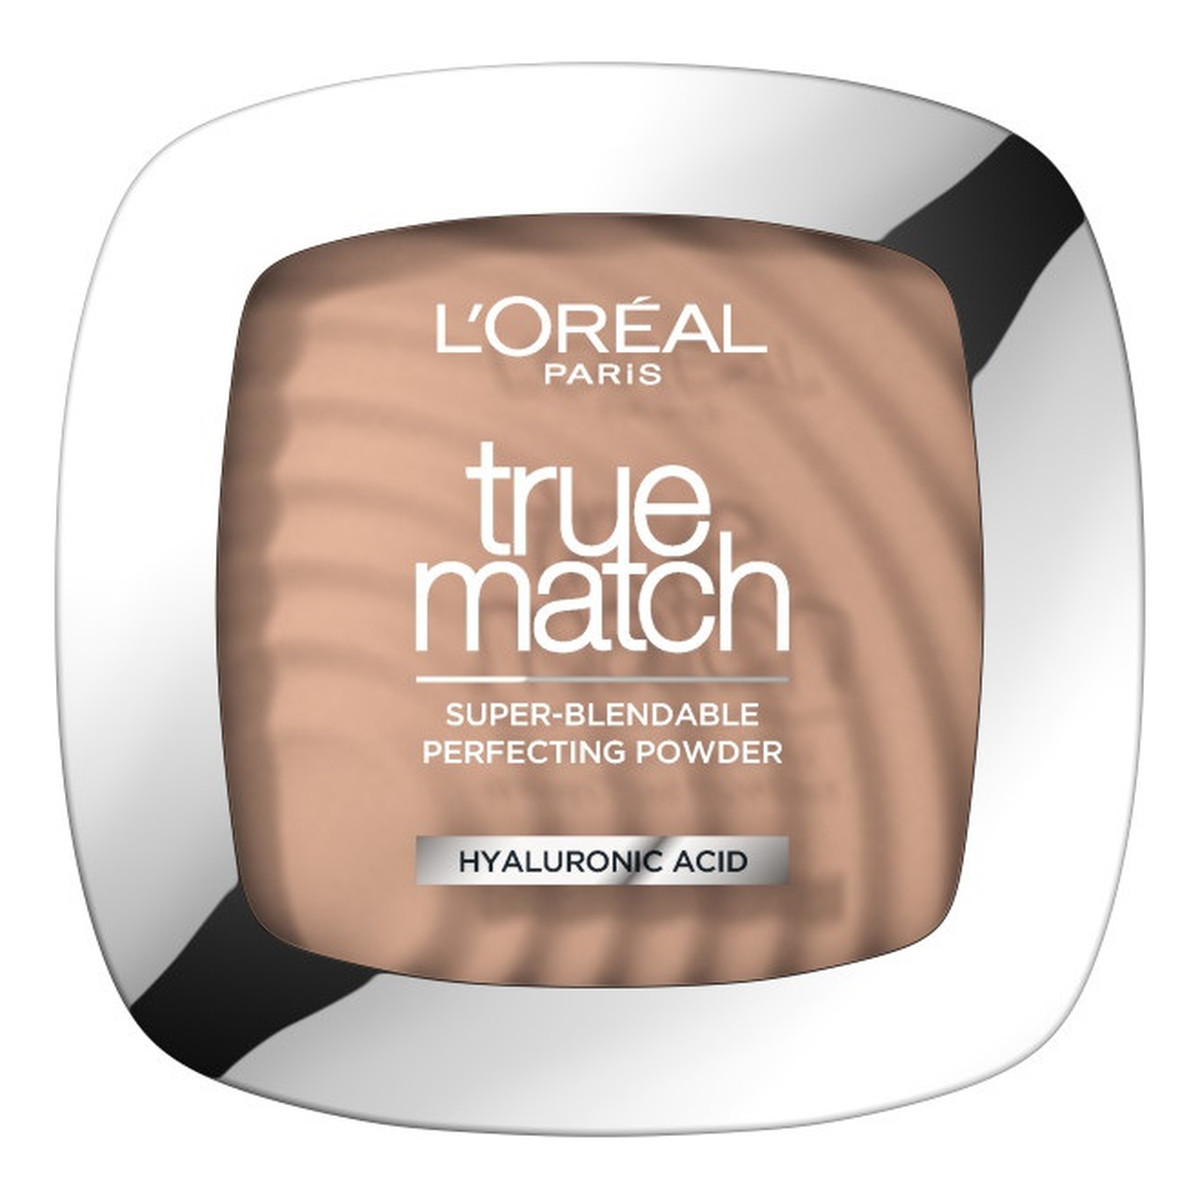 L'Oreal Paris True Match Super-Blendable Perfecting Powder matujący puder do twarzy 9g